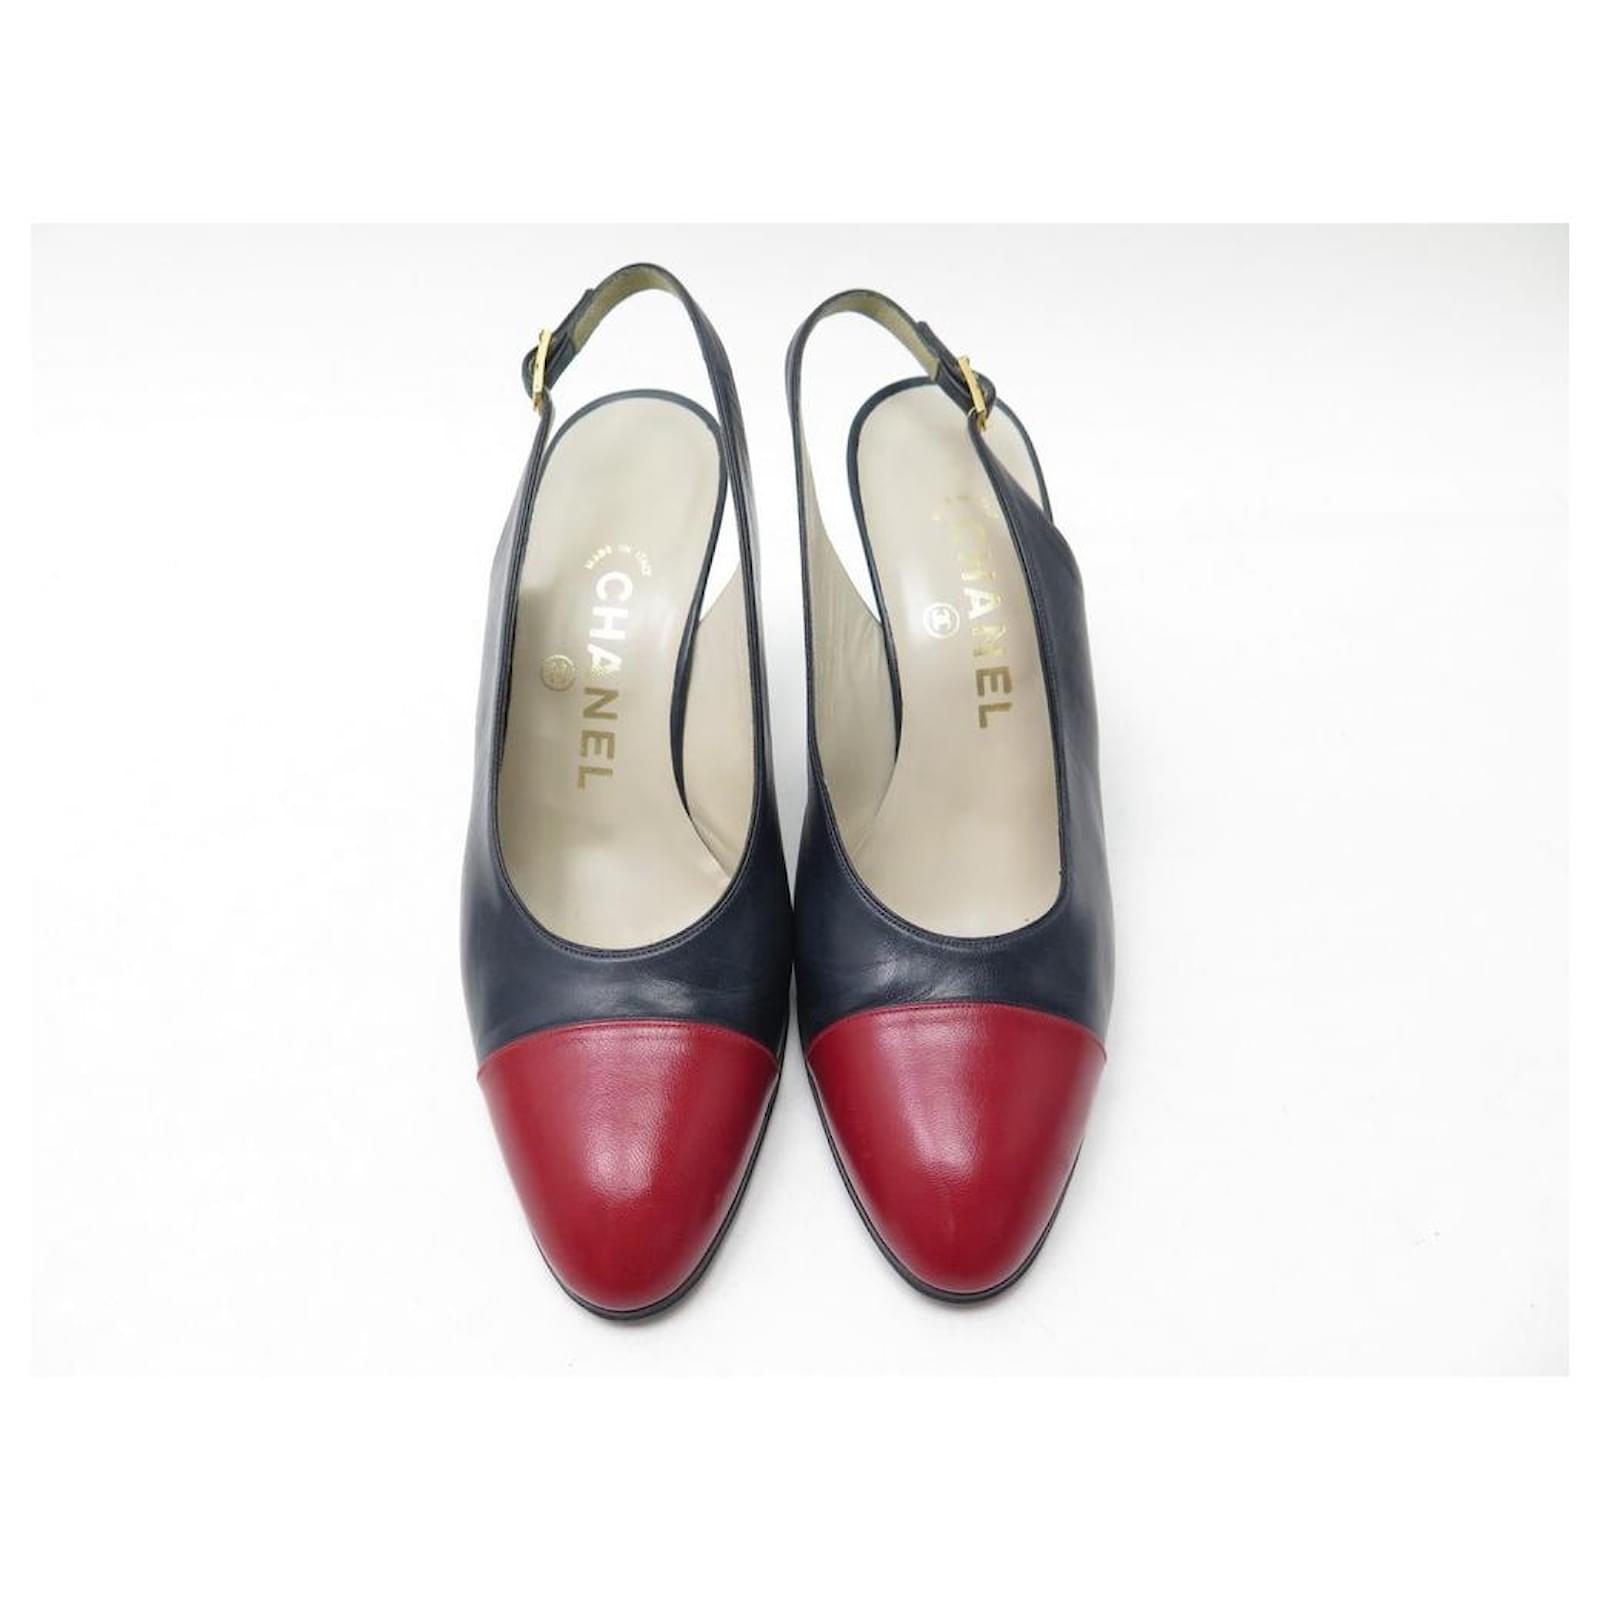 Chanel Size 38 #chanelshoes @redeuxapparel #consignmentboutique #shoplocal  #designershoes